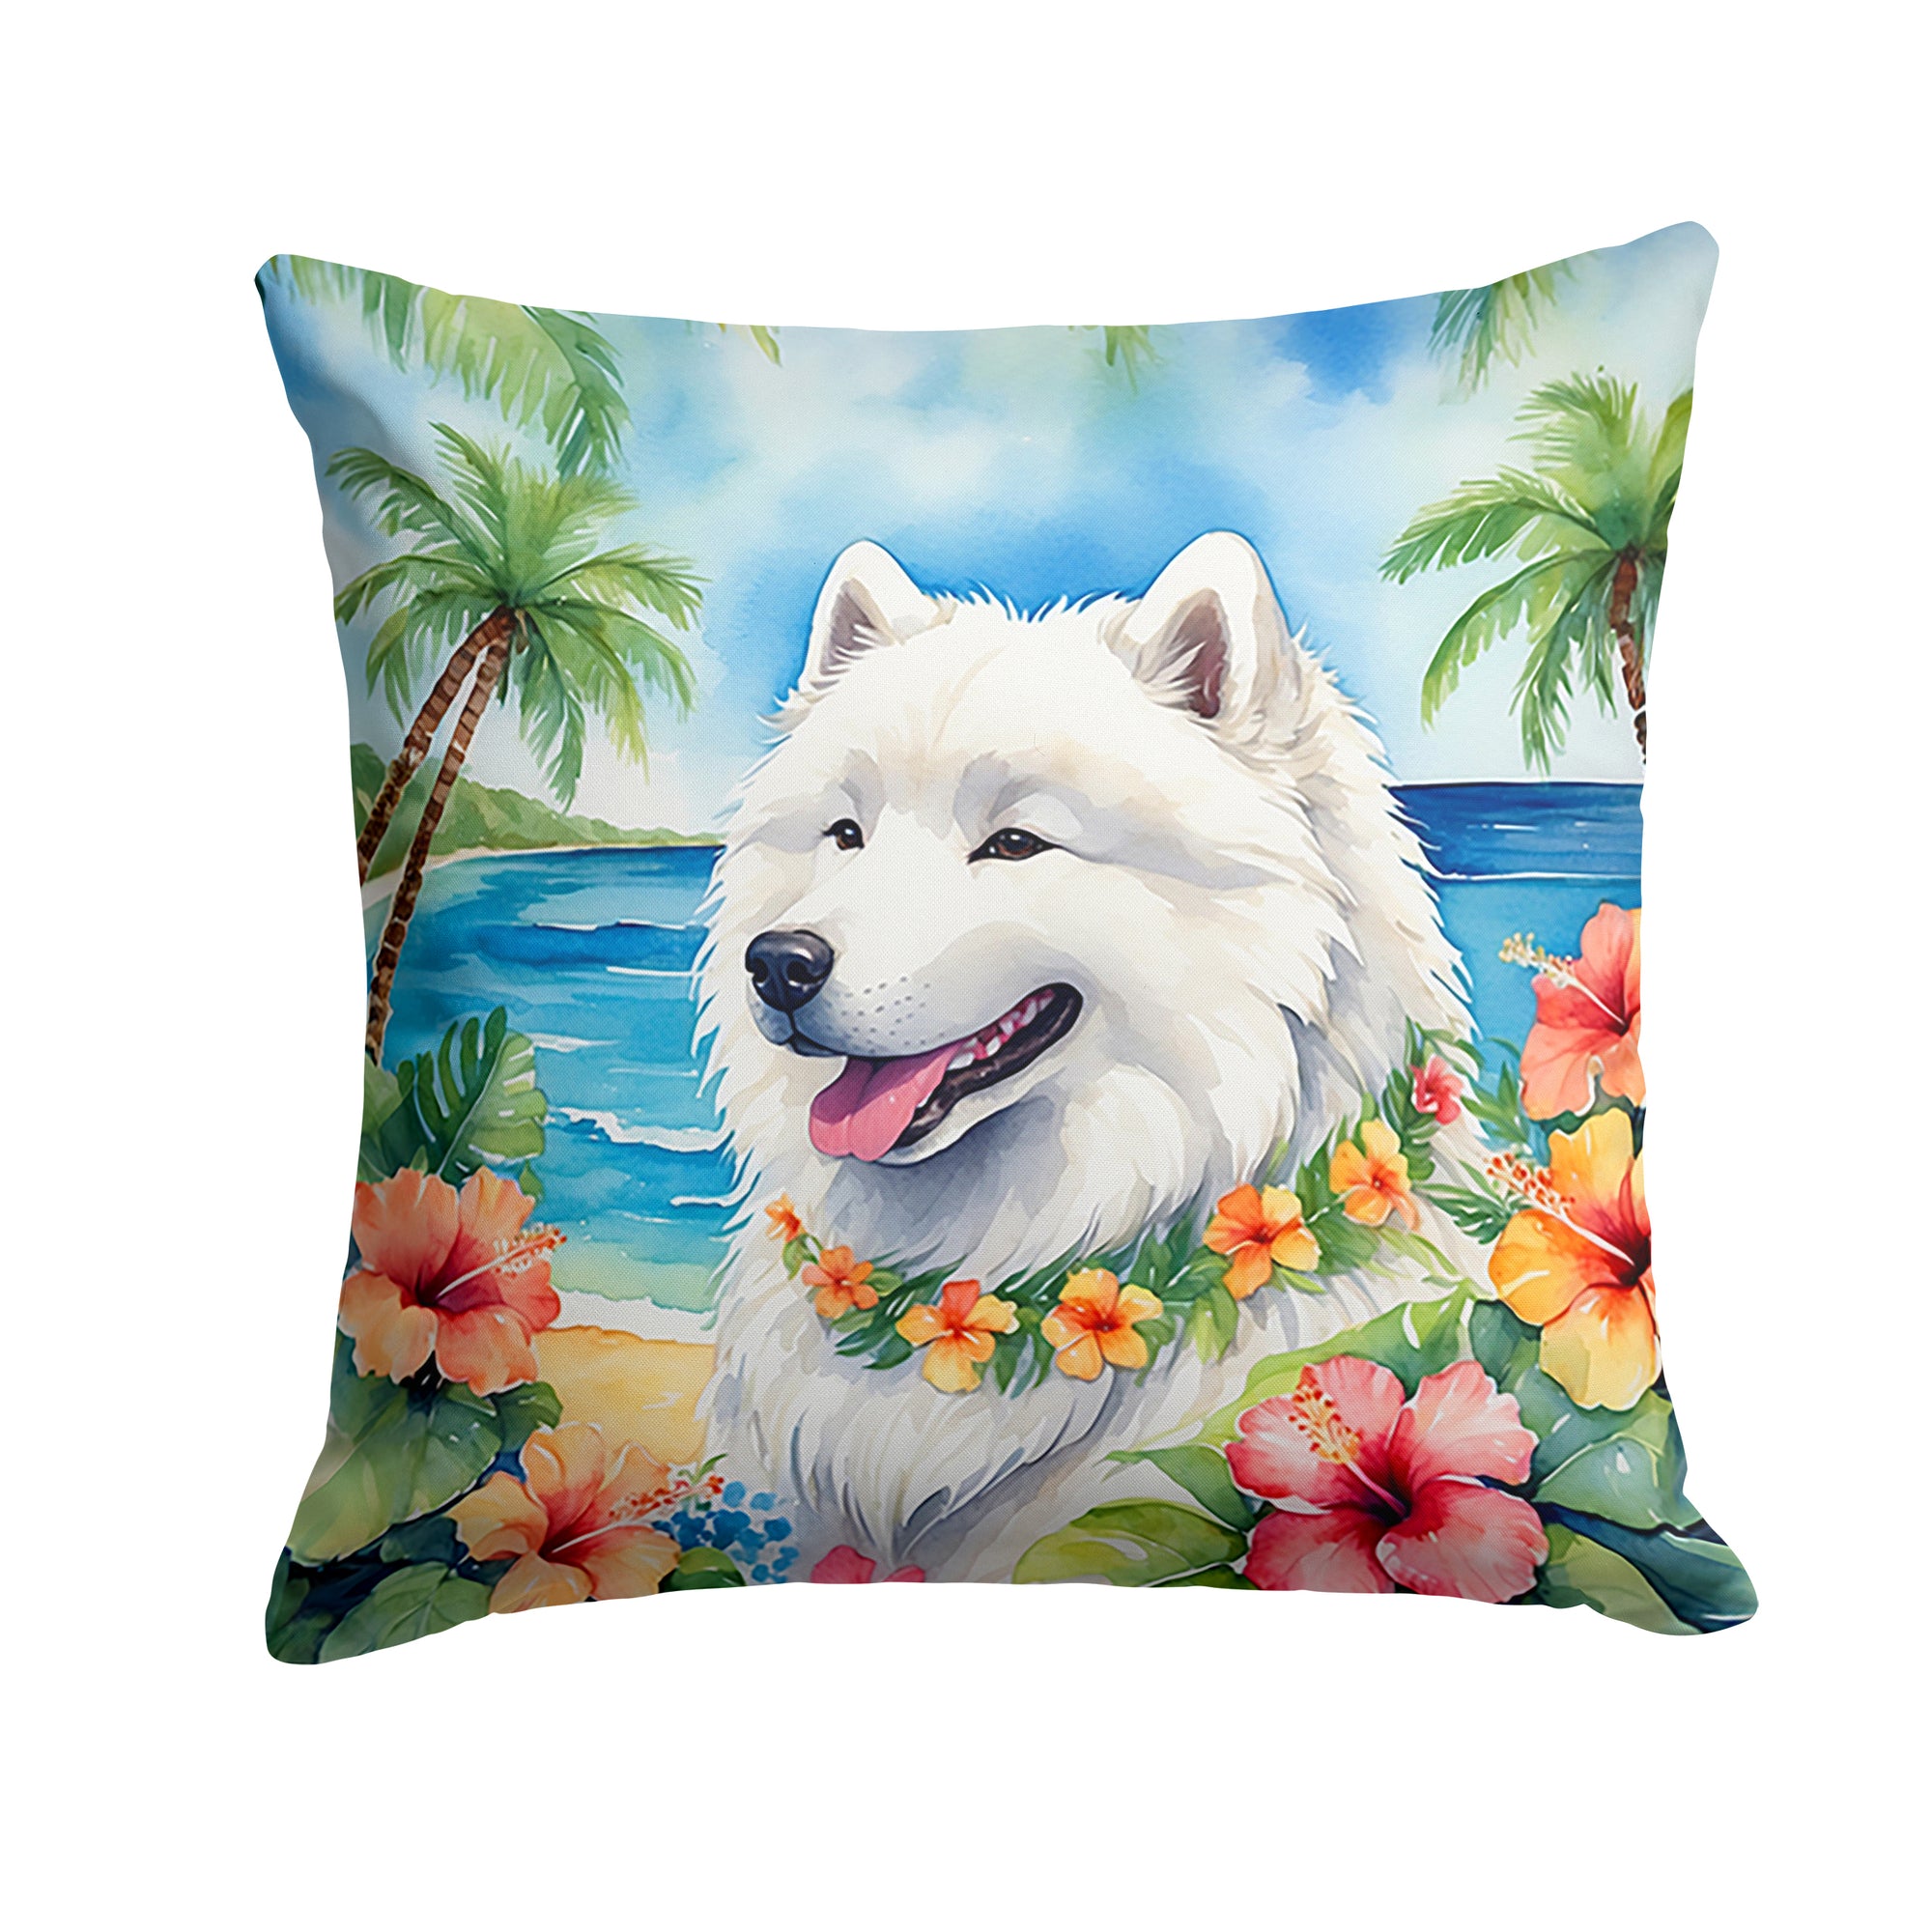 Buy this Samoyed Luau Throw Pillow